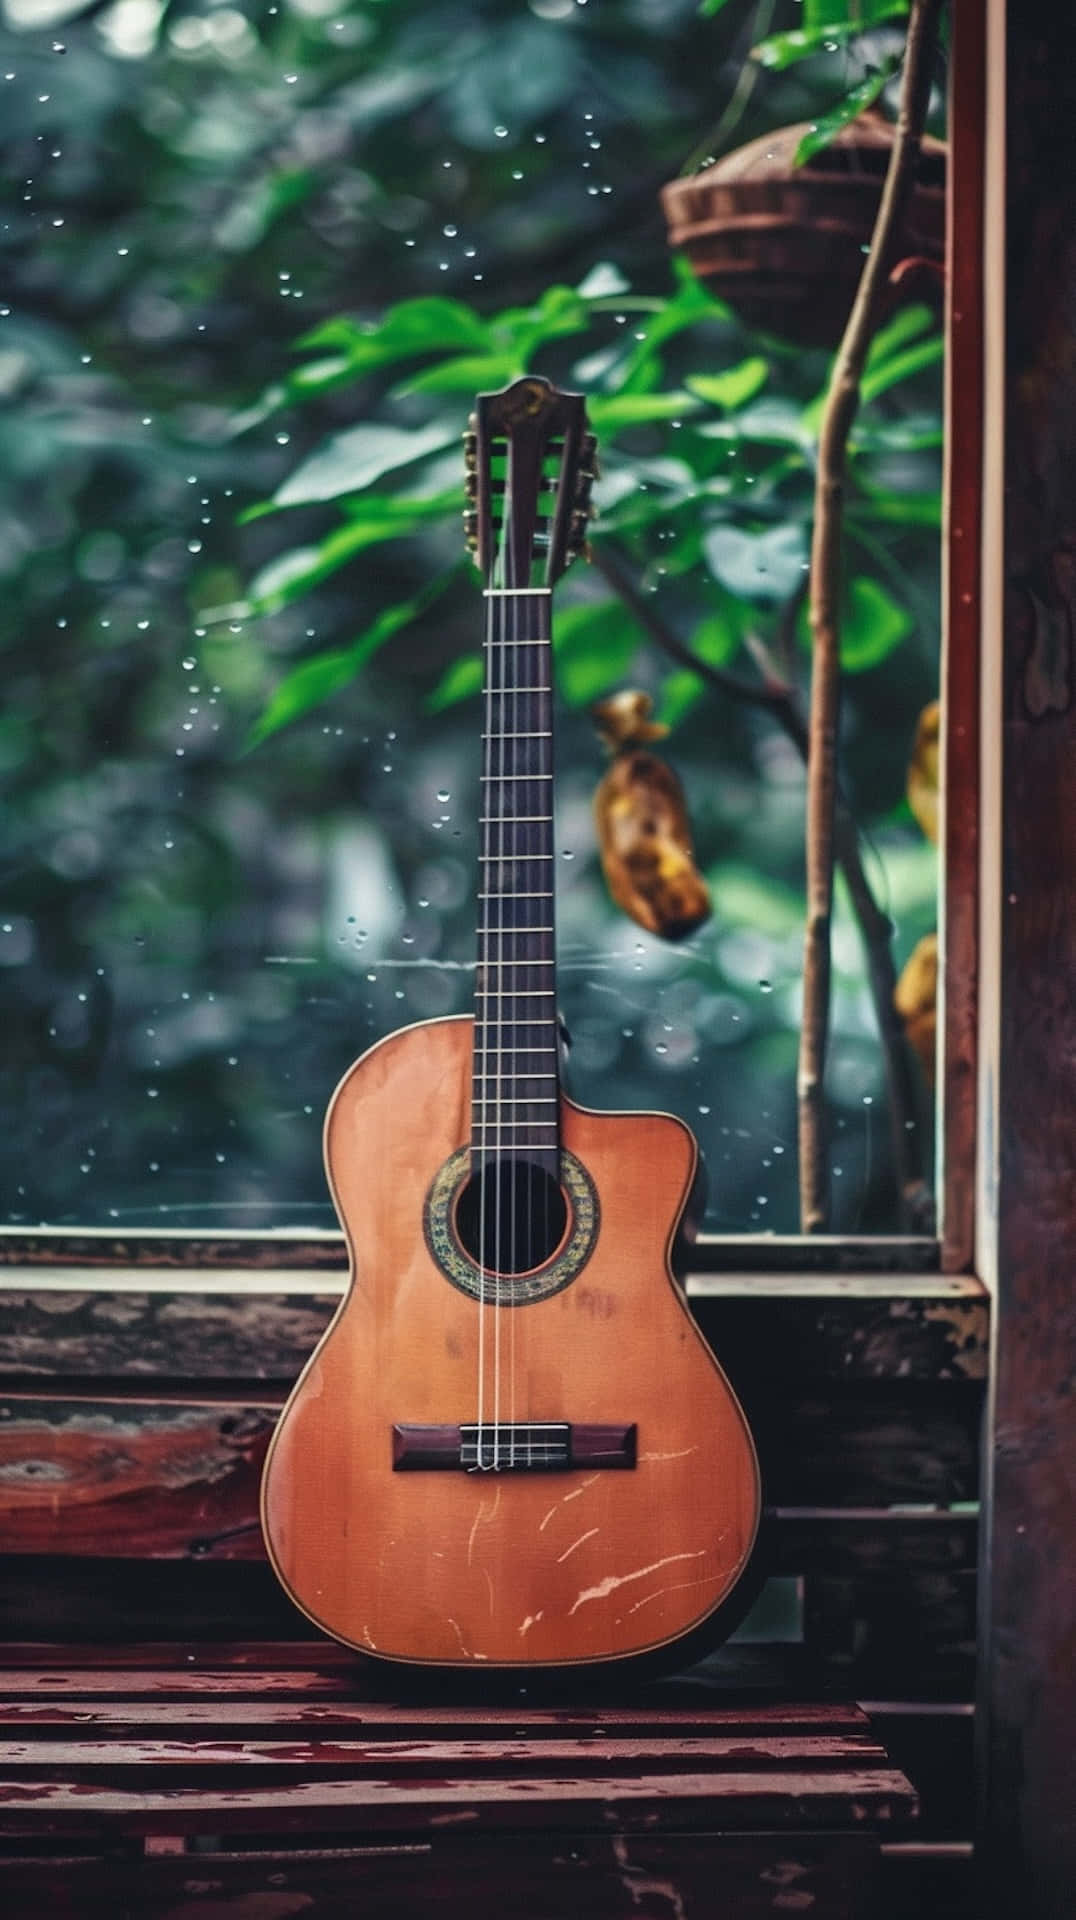 Rainy Day Guitar Melancholy Wallpaper